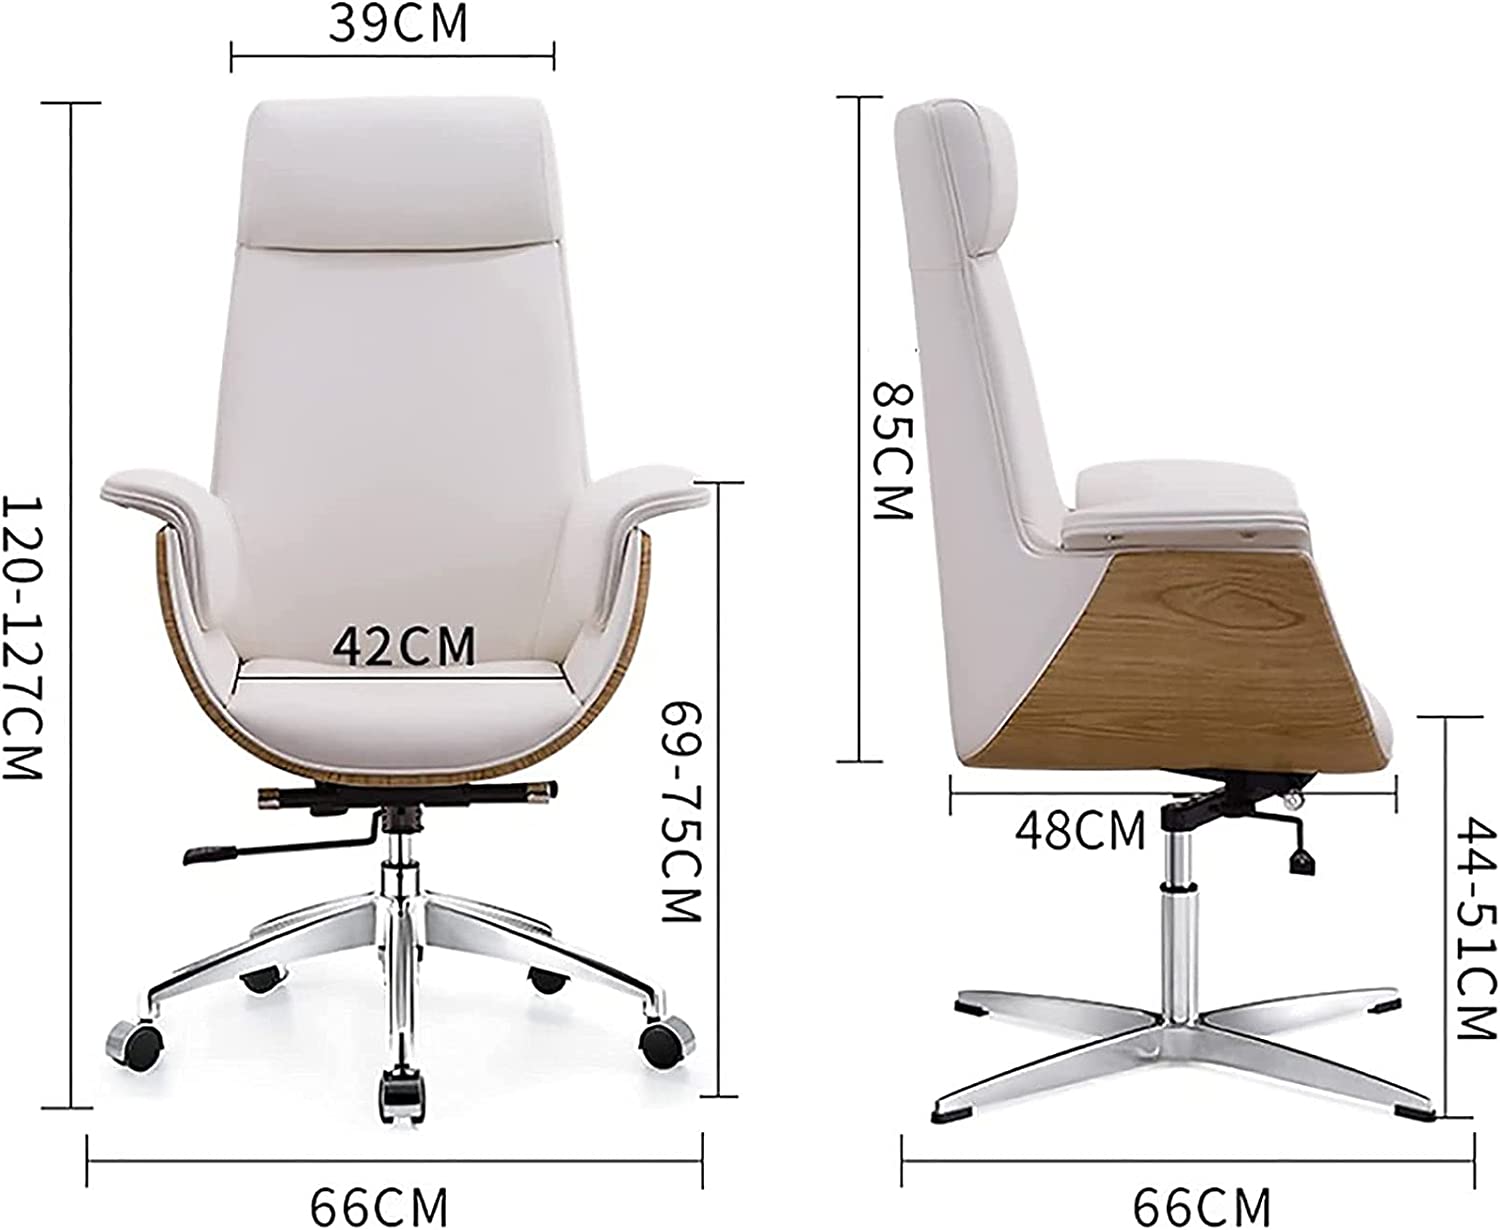 Modern Executive Chair | HOG - Home. Office. Garden online marketplace